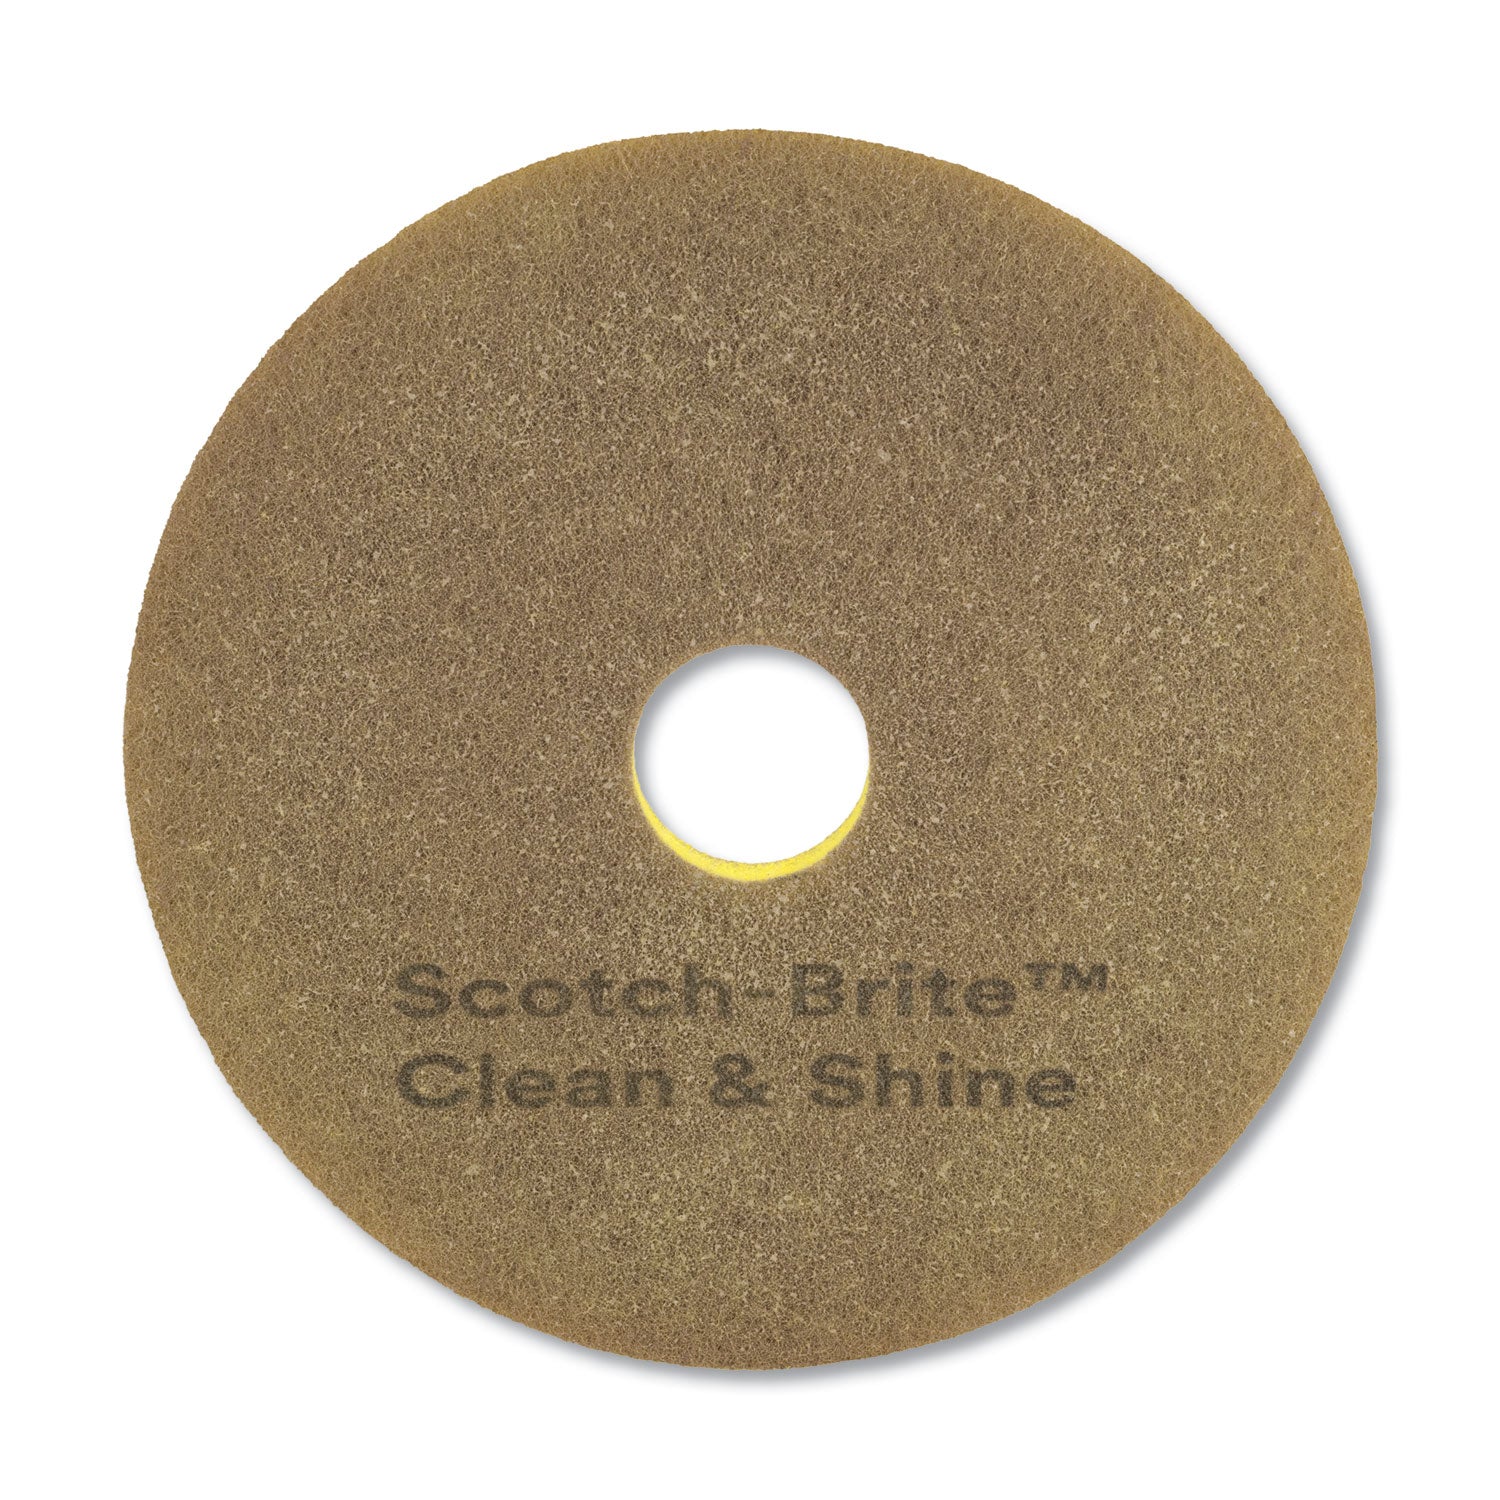 clean-and-shine-pad-17-diameter-brown-yellow-5-carton_mmm09544 - 1